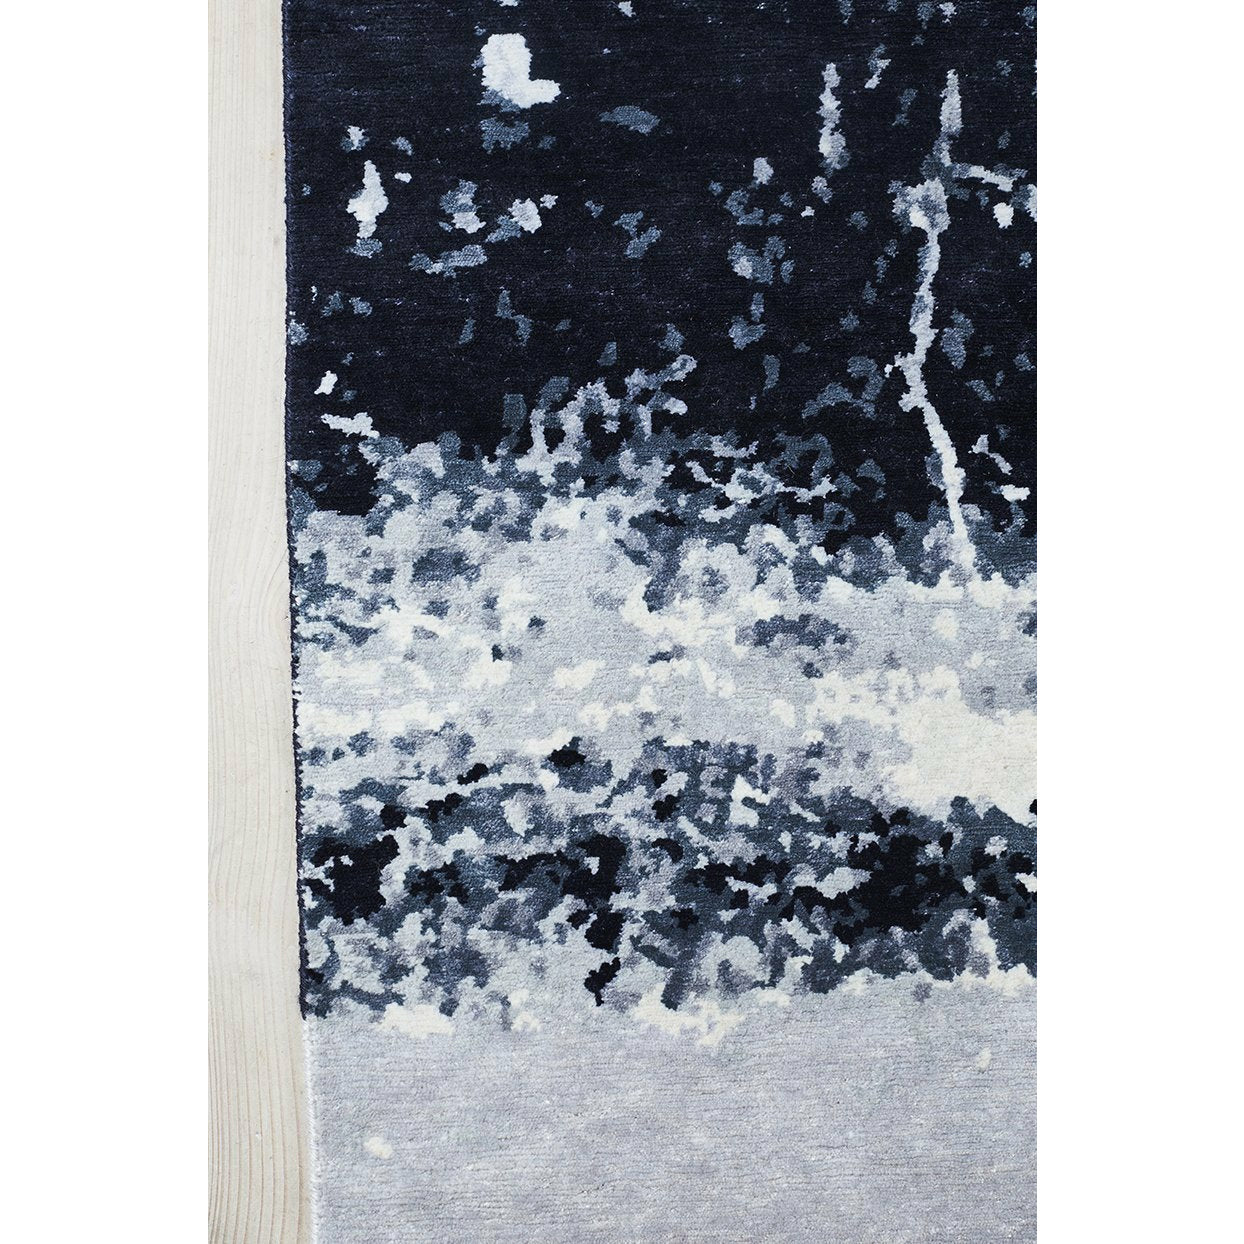 Massimo Stardust Rag Blue Earth Bamboo, 170x240 cm